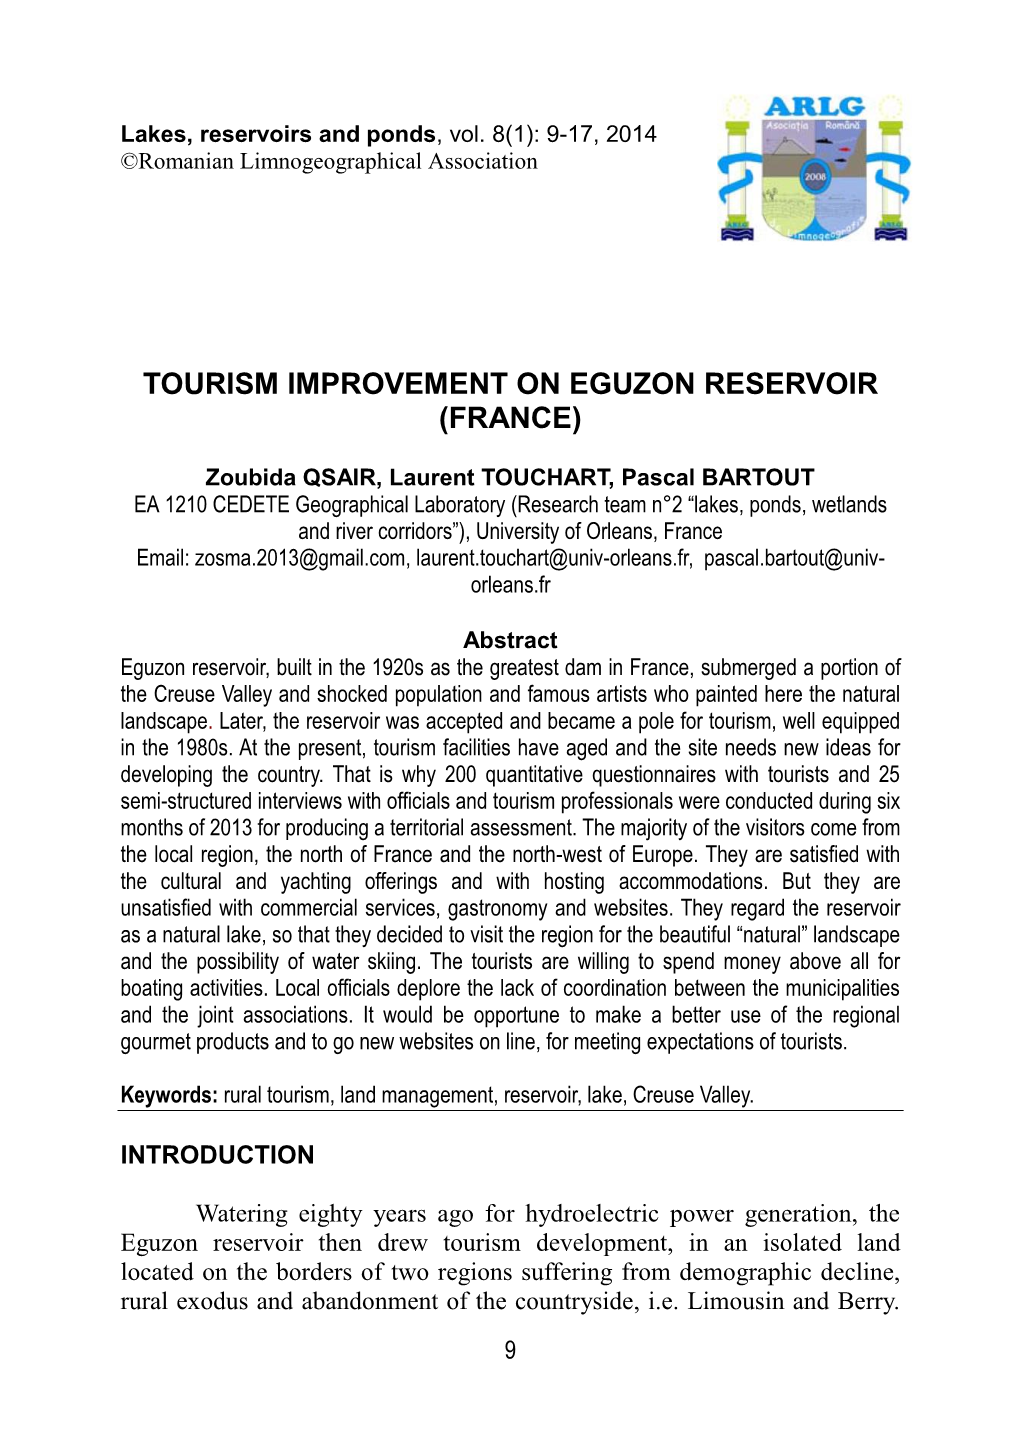 Tourism Improvement on Eguzon Reservoir (France)